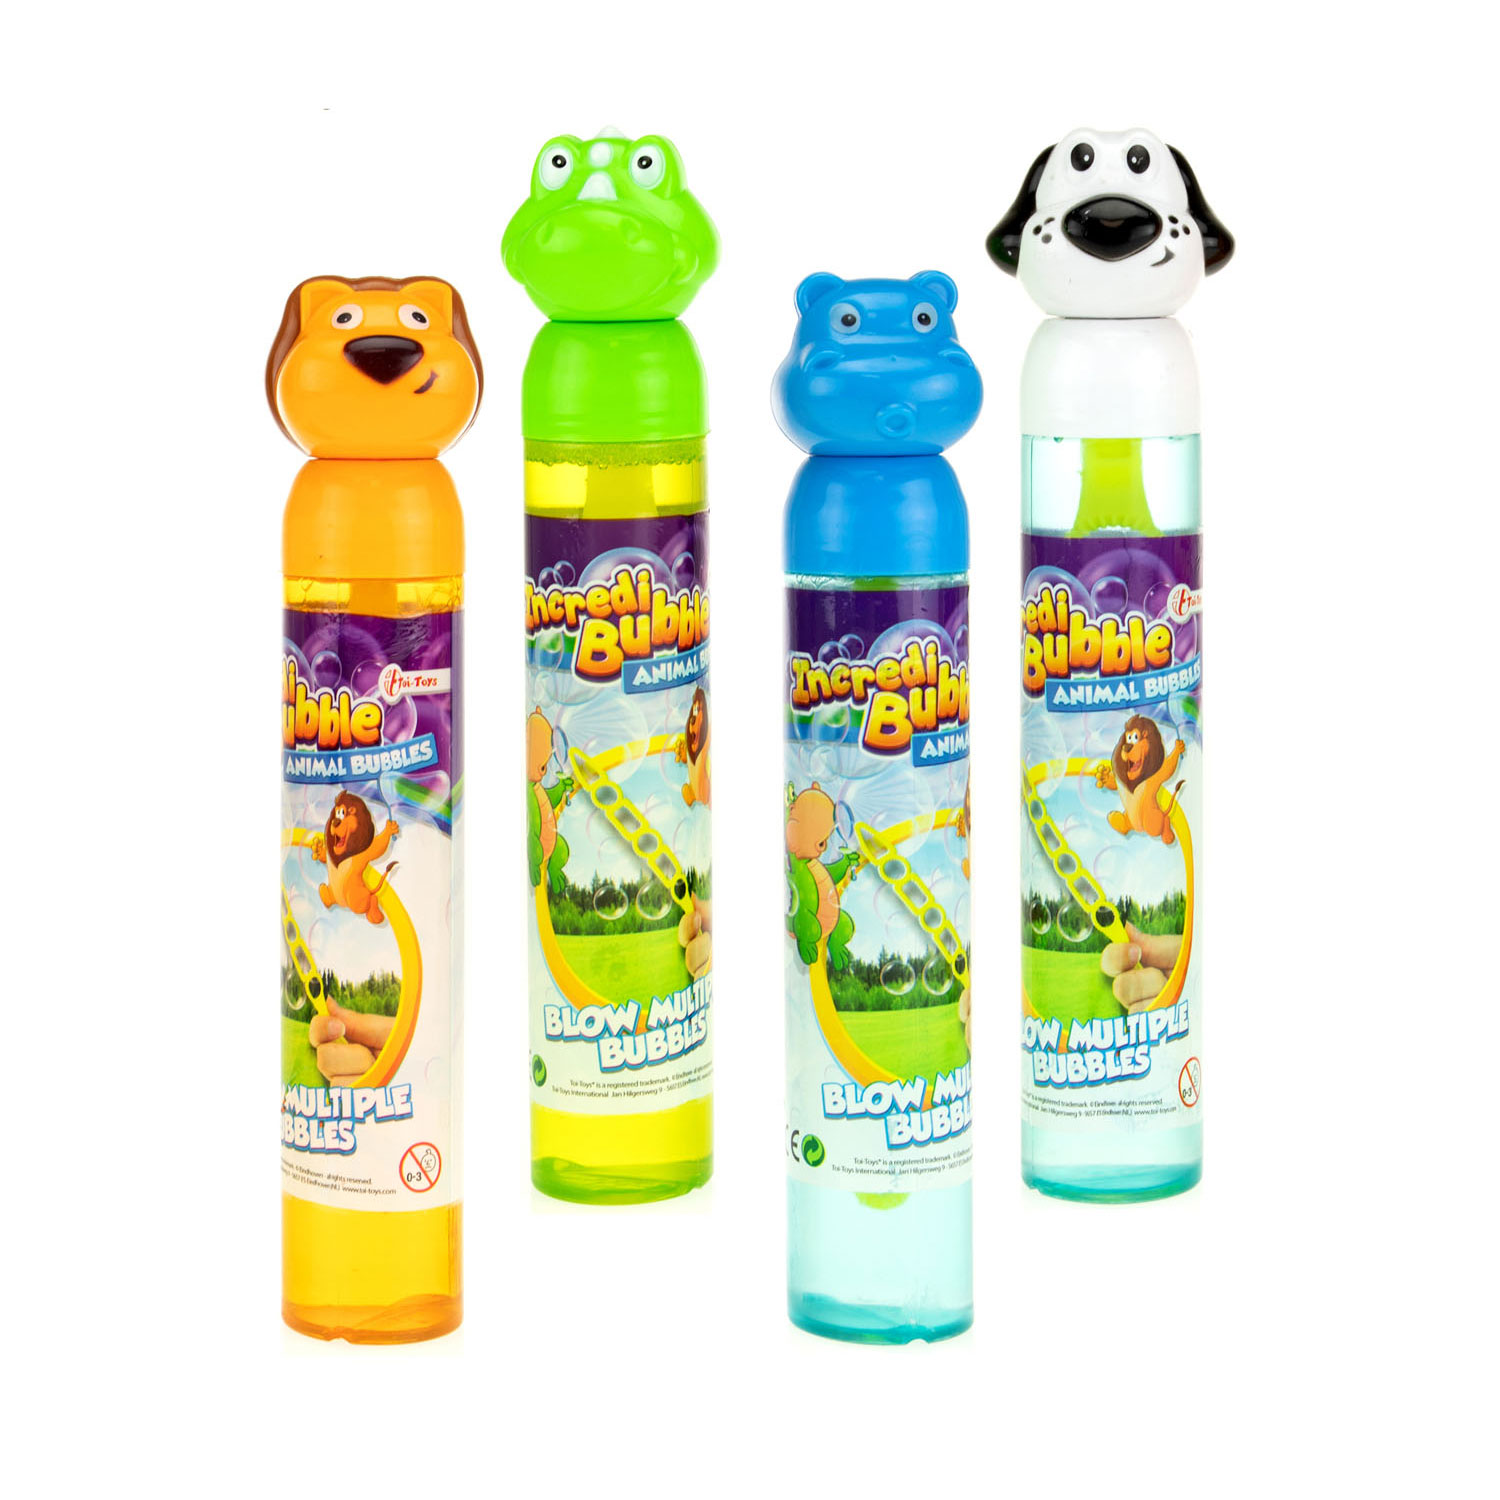 Betuttelen veiligheid niezen Bubble Bottle Animal | Thimble Toys